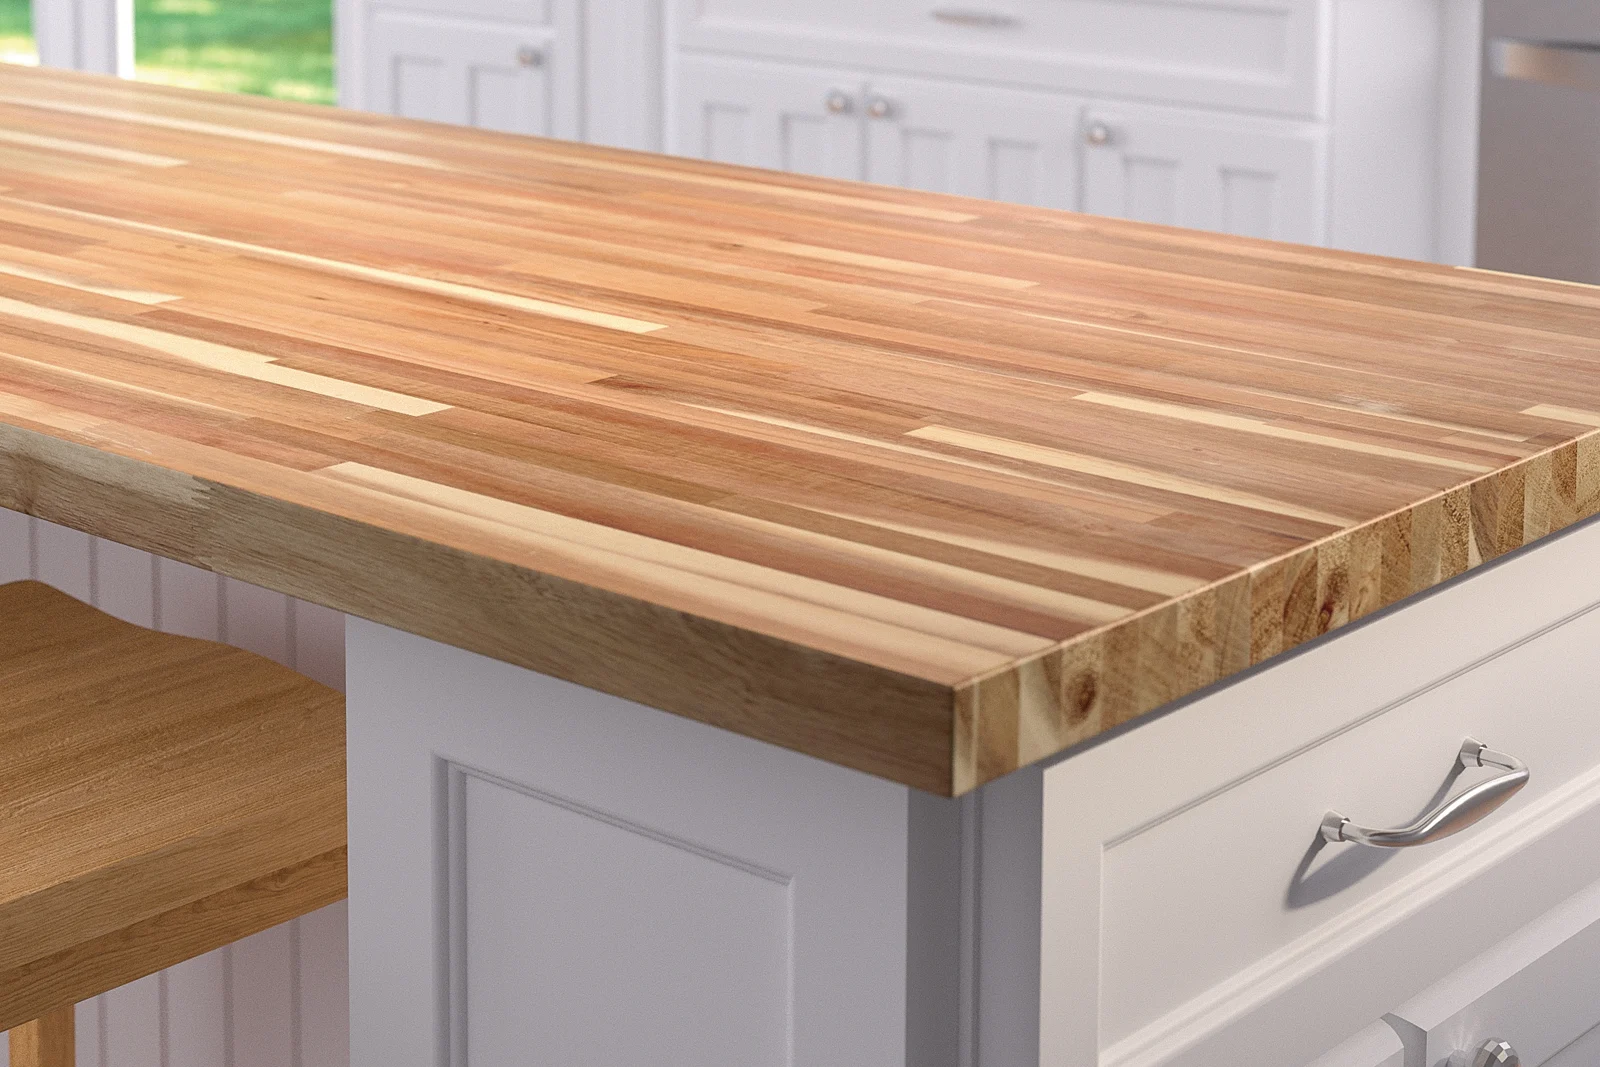 A wood countertop